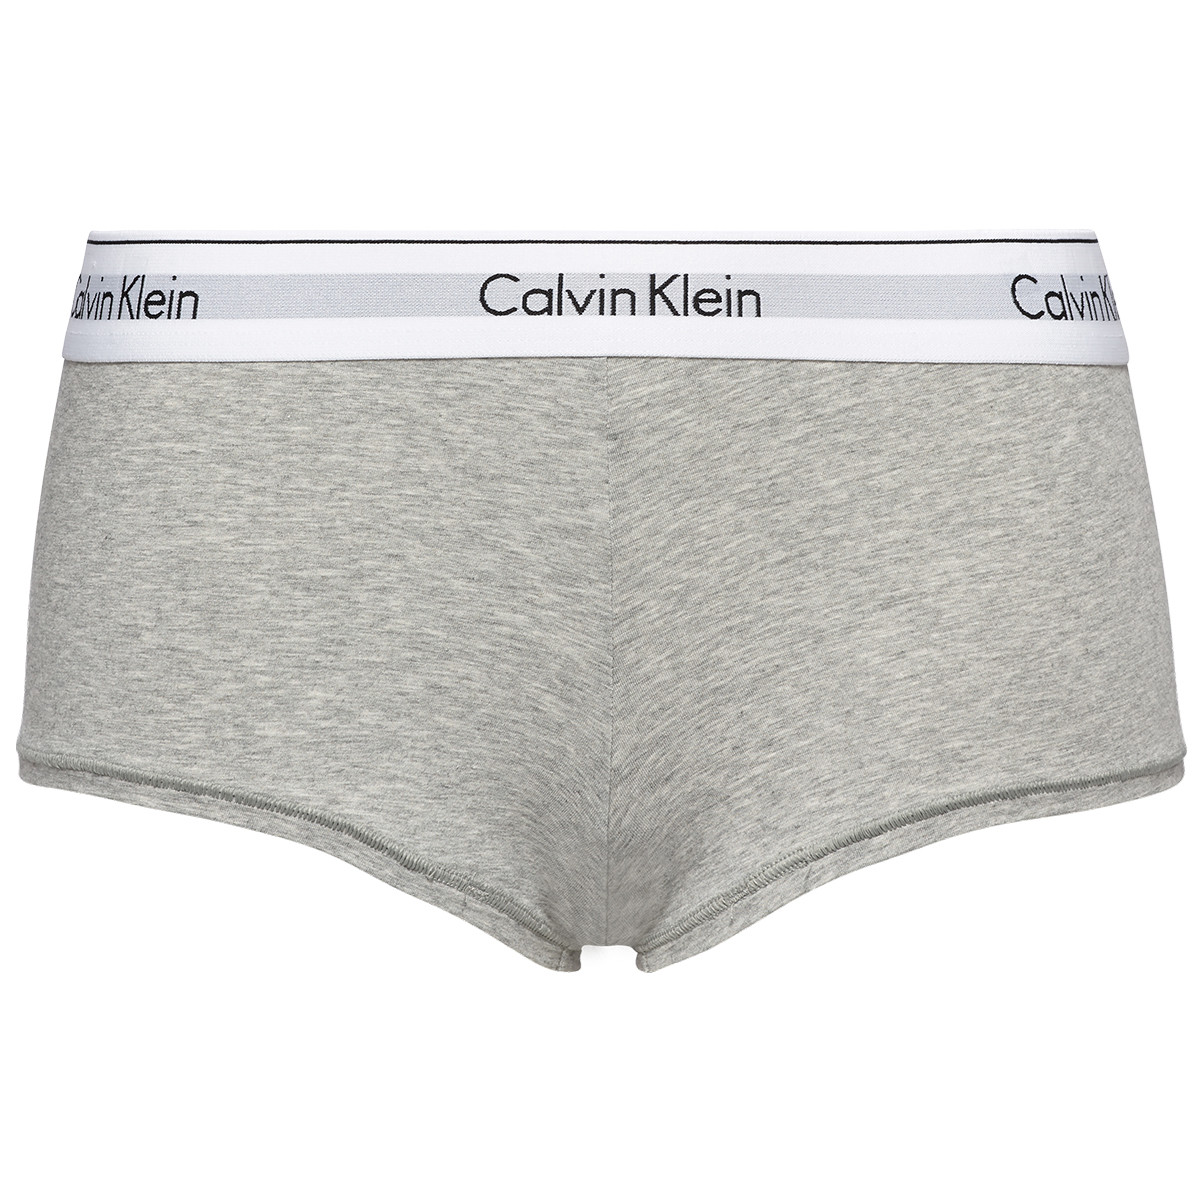 CALVIN KLEIN SHORTS F3788 020